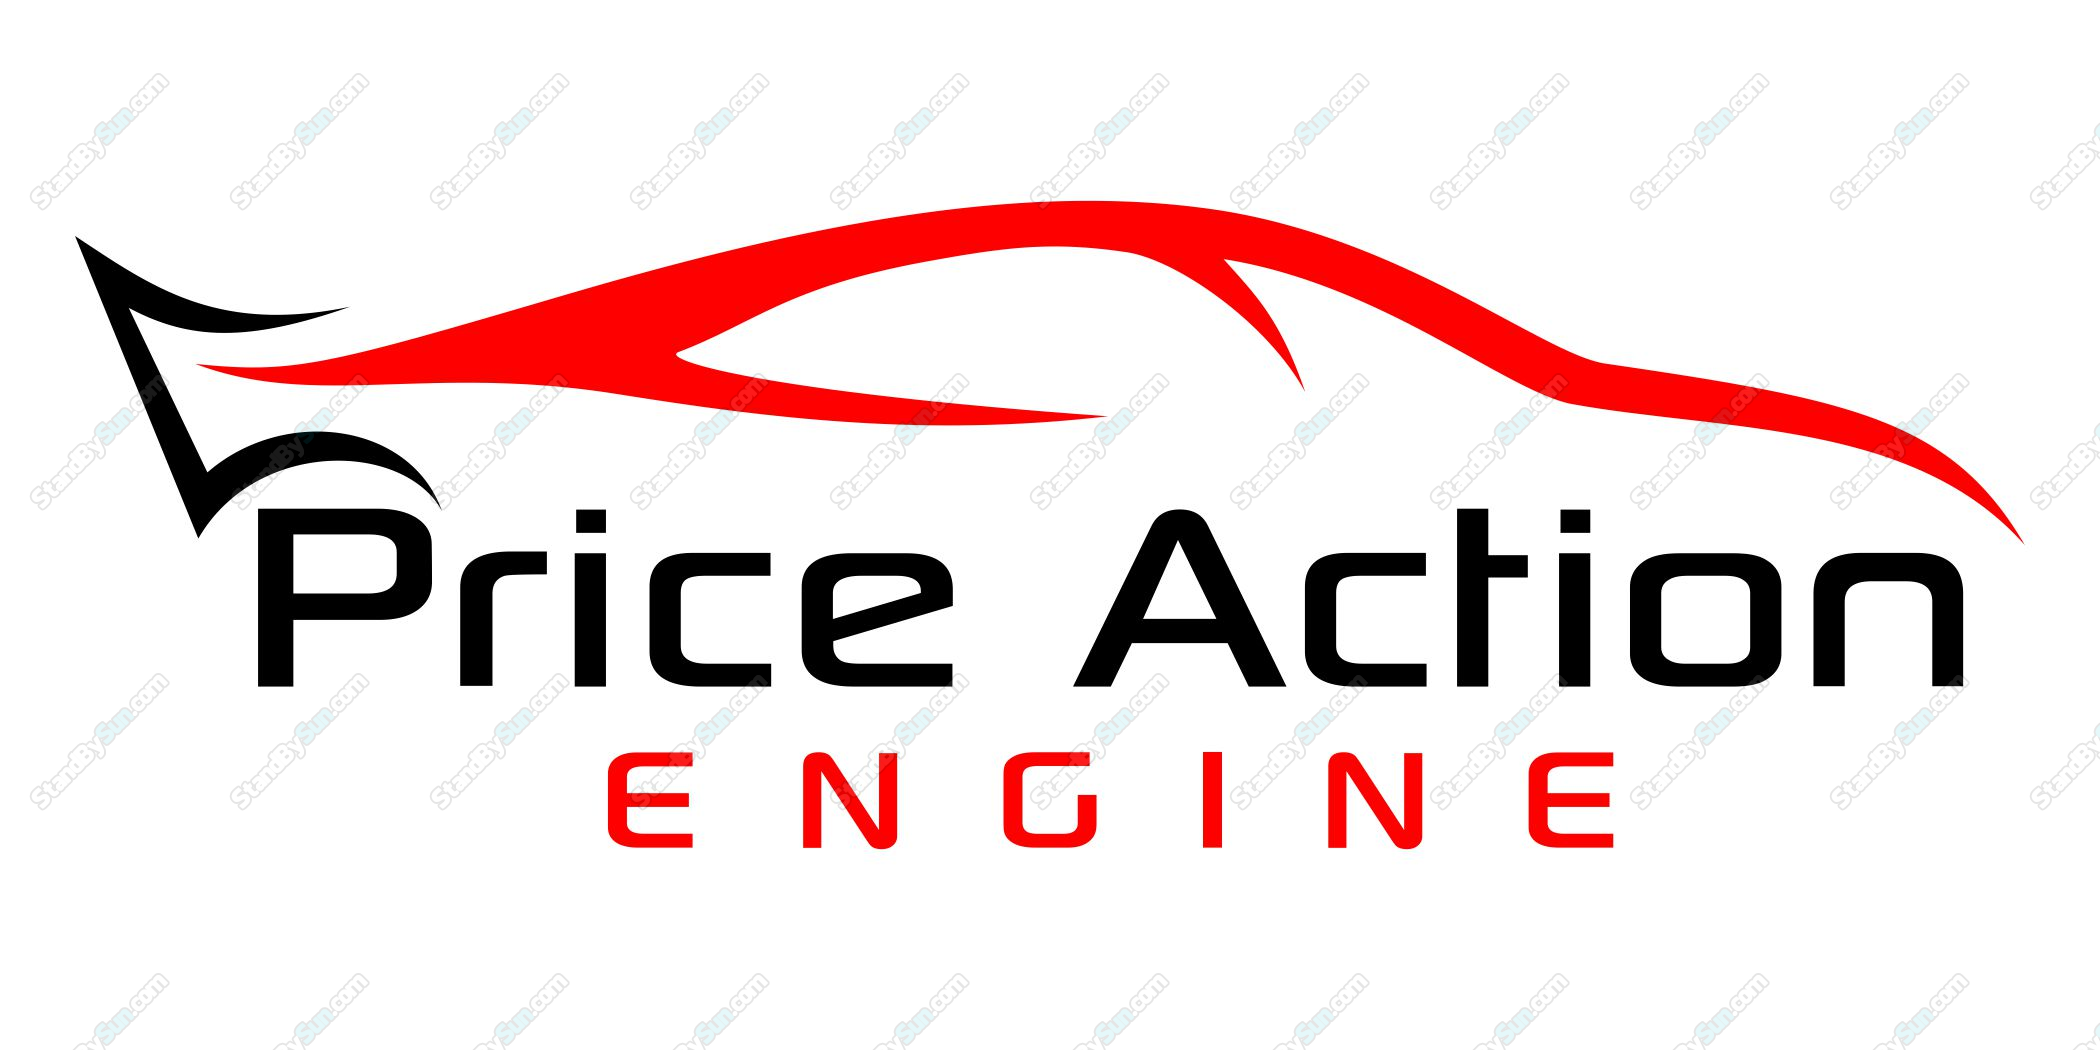 AuthenticFX - Erron Adams - Price Action Engine 2